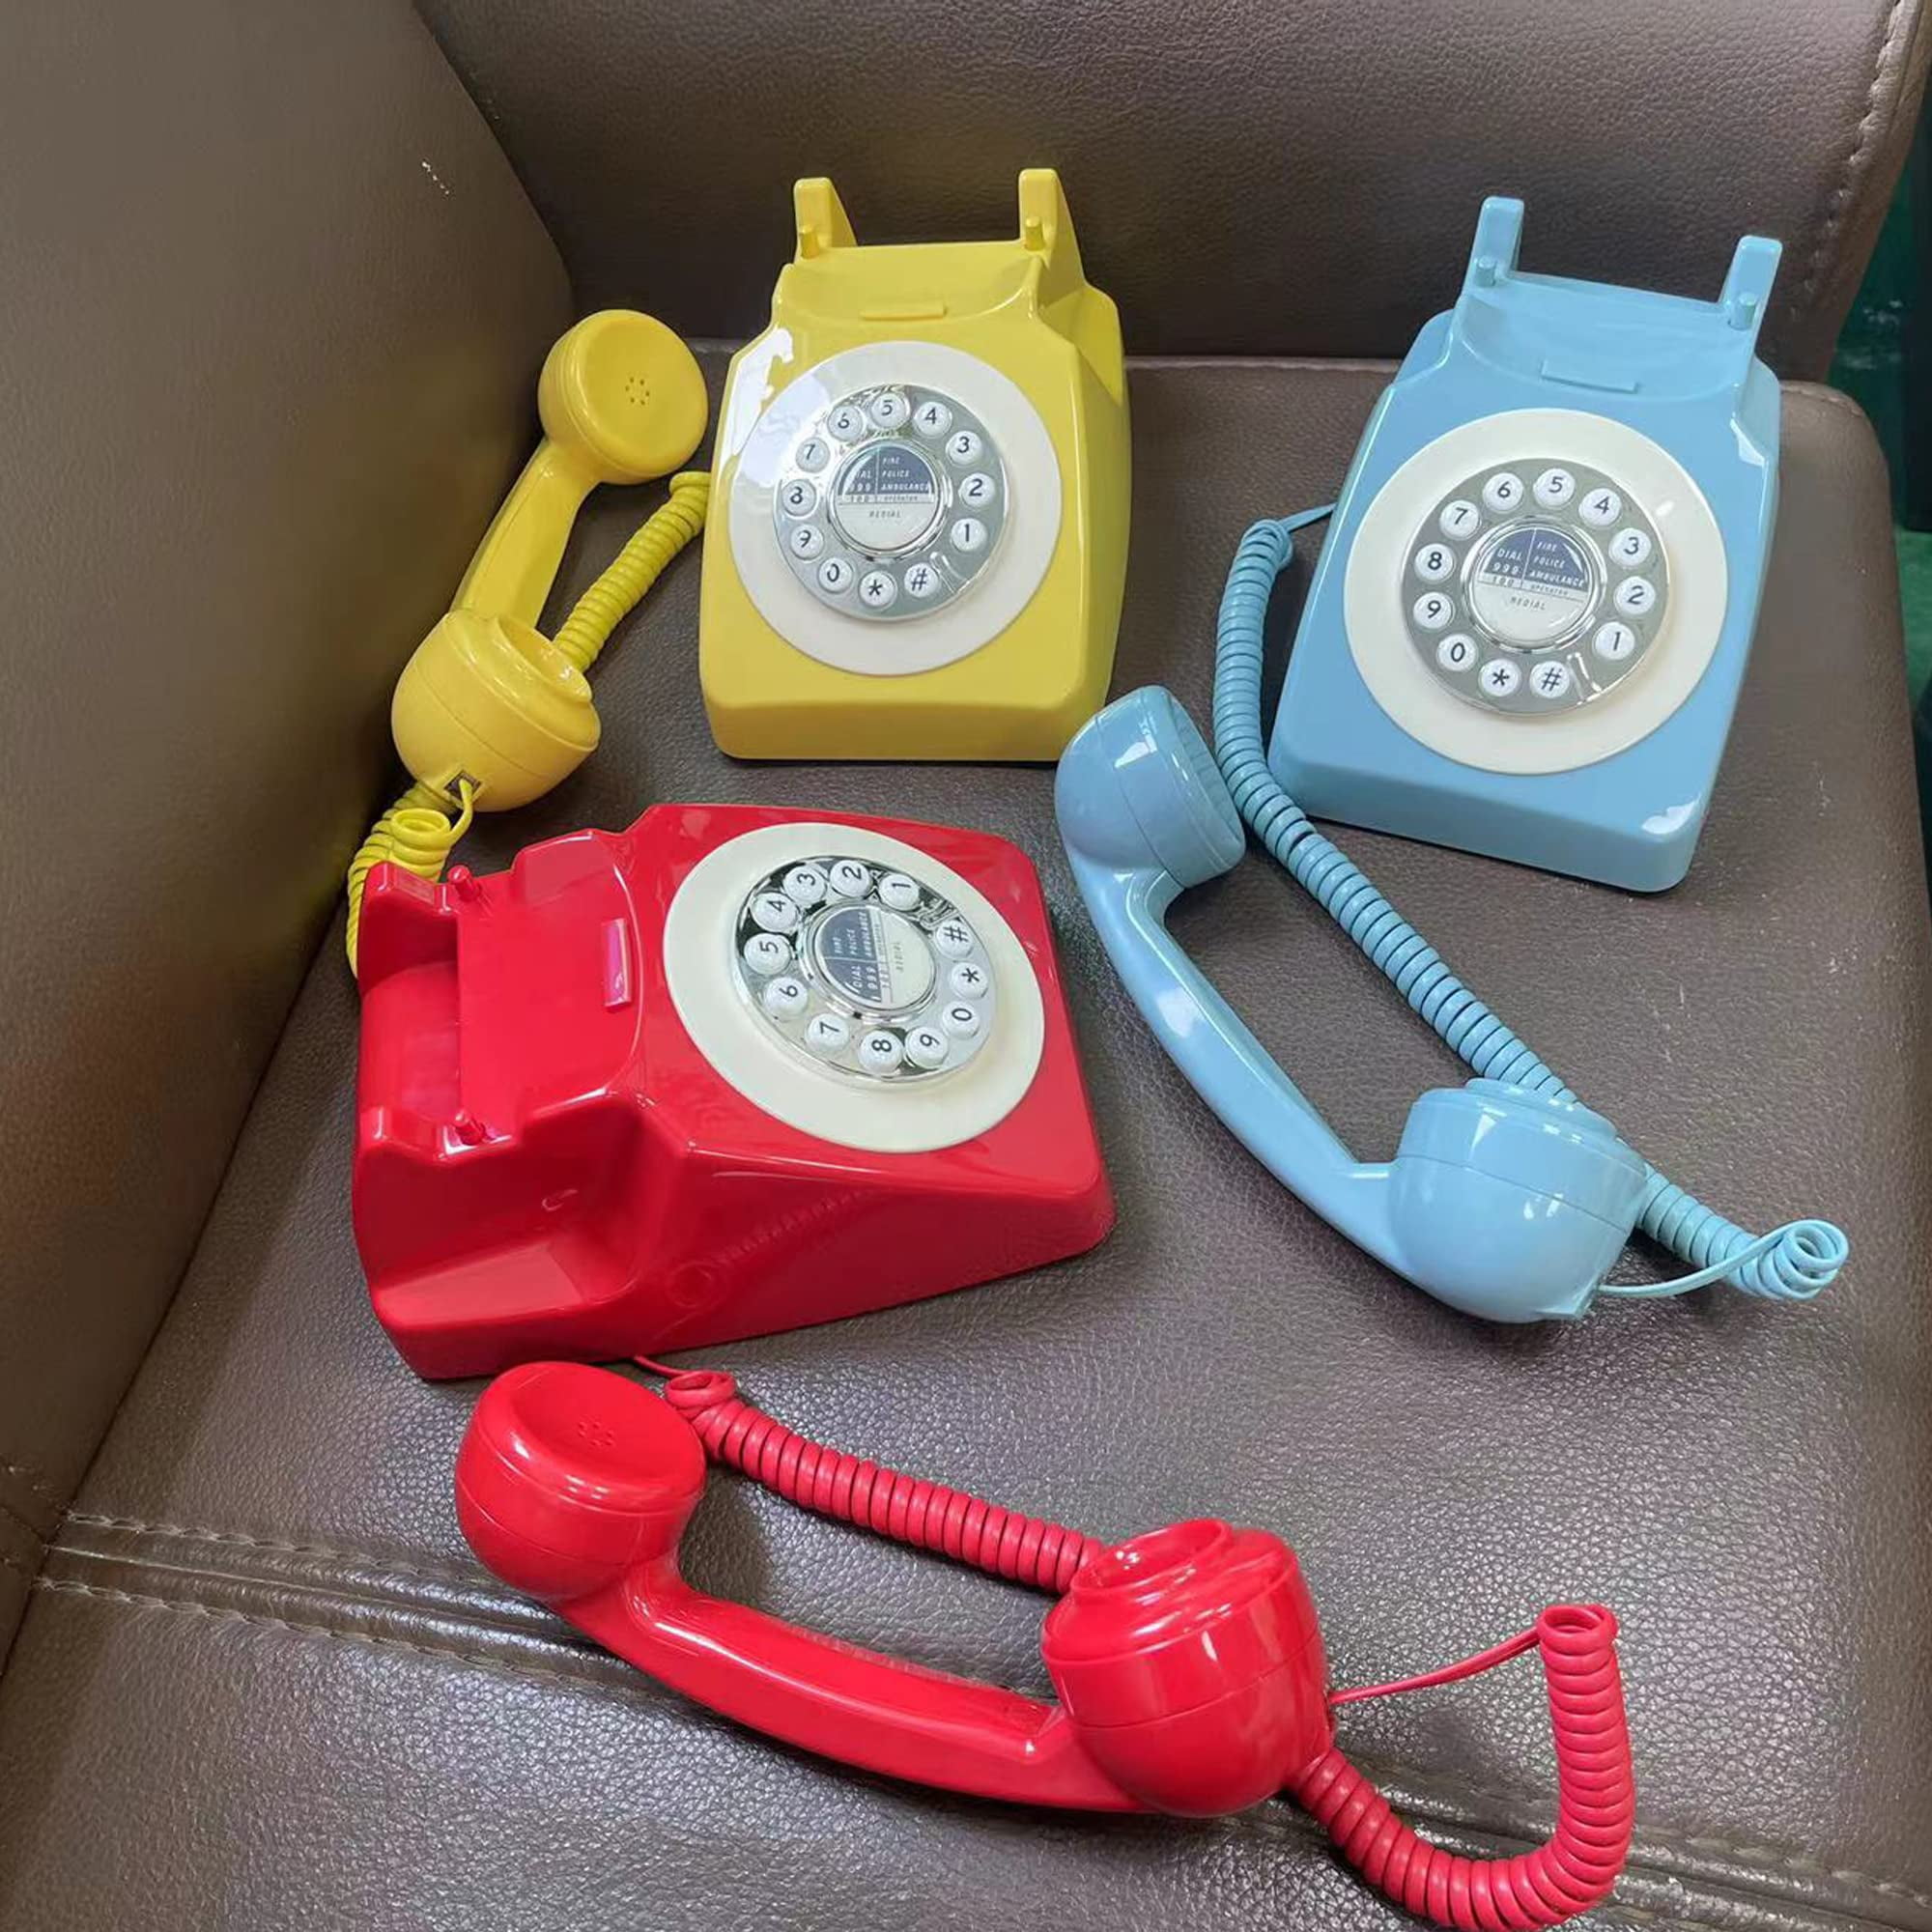 Red Rotary Dial Telephones Benotek 1980'S Classic Old Style Retro Landline  Desk Telephone Single Line Corded Phone Home Office School Hotel